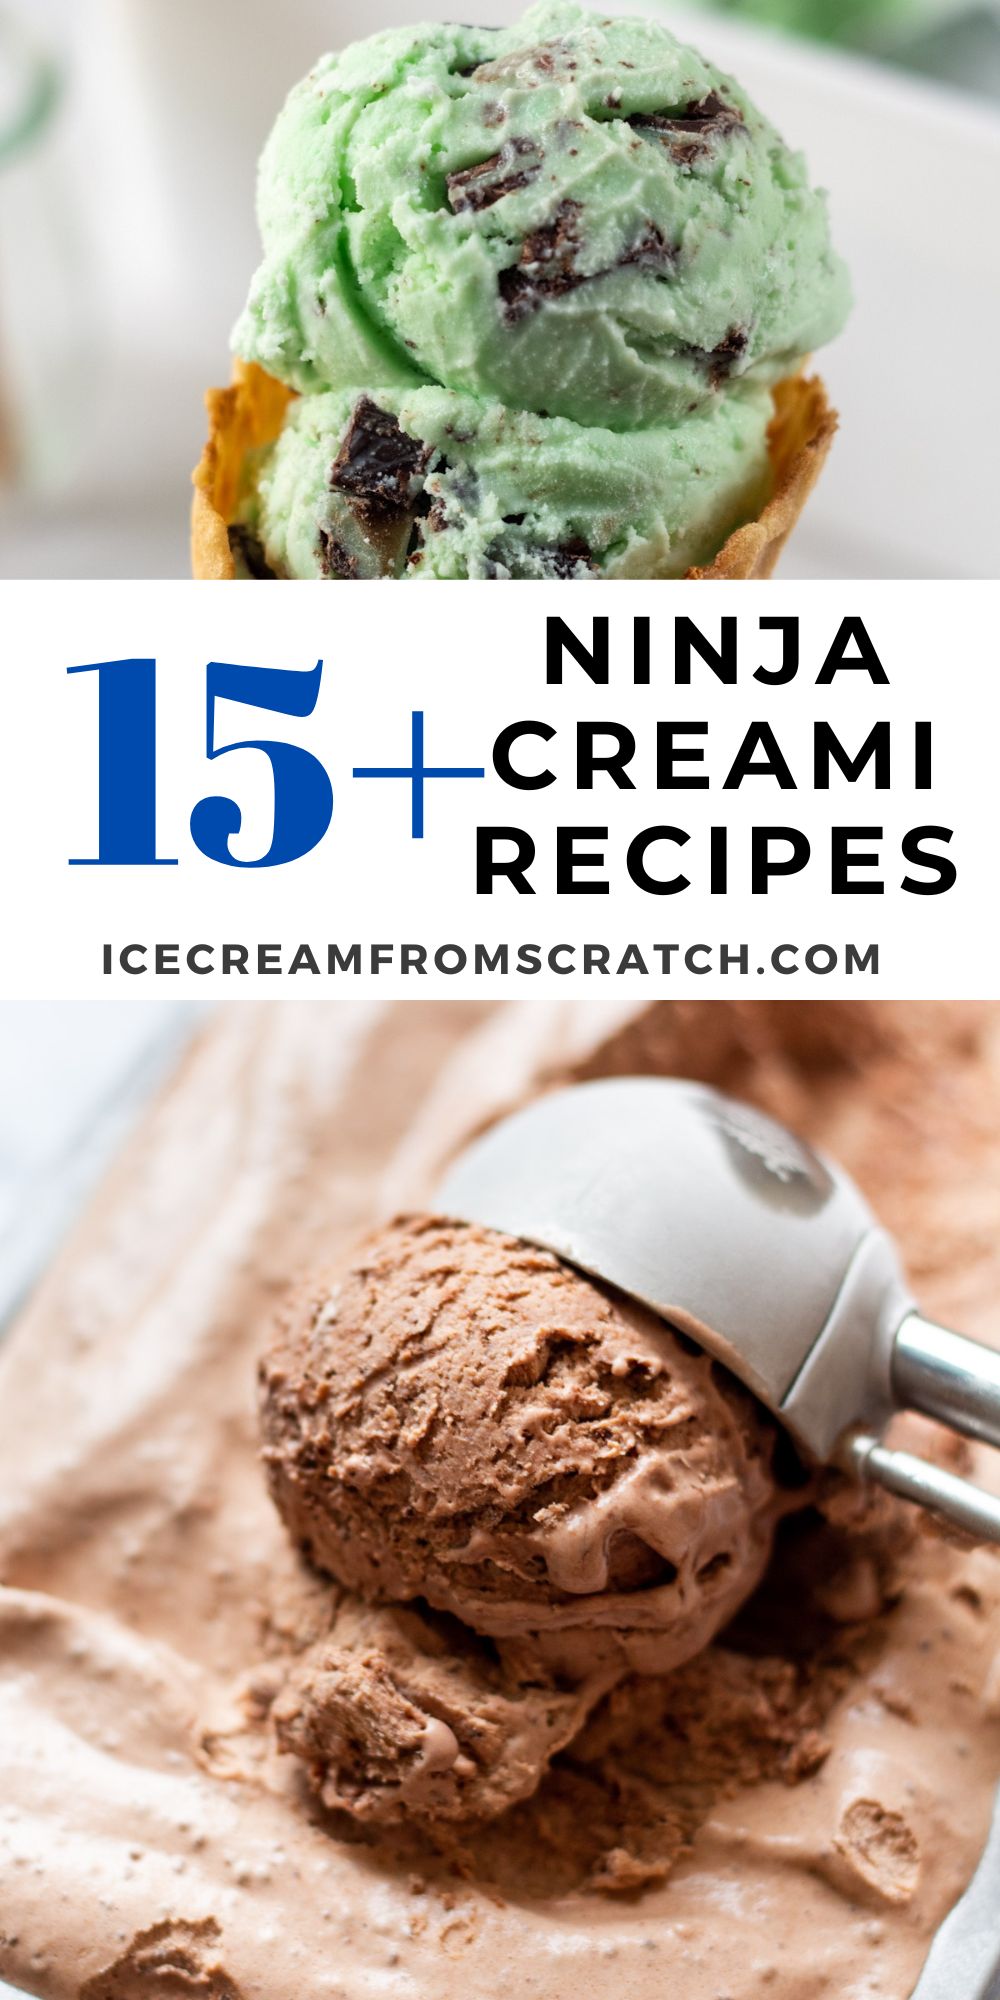 Ninja Creami Recipes - Ice Cream From Scratch